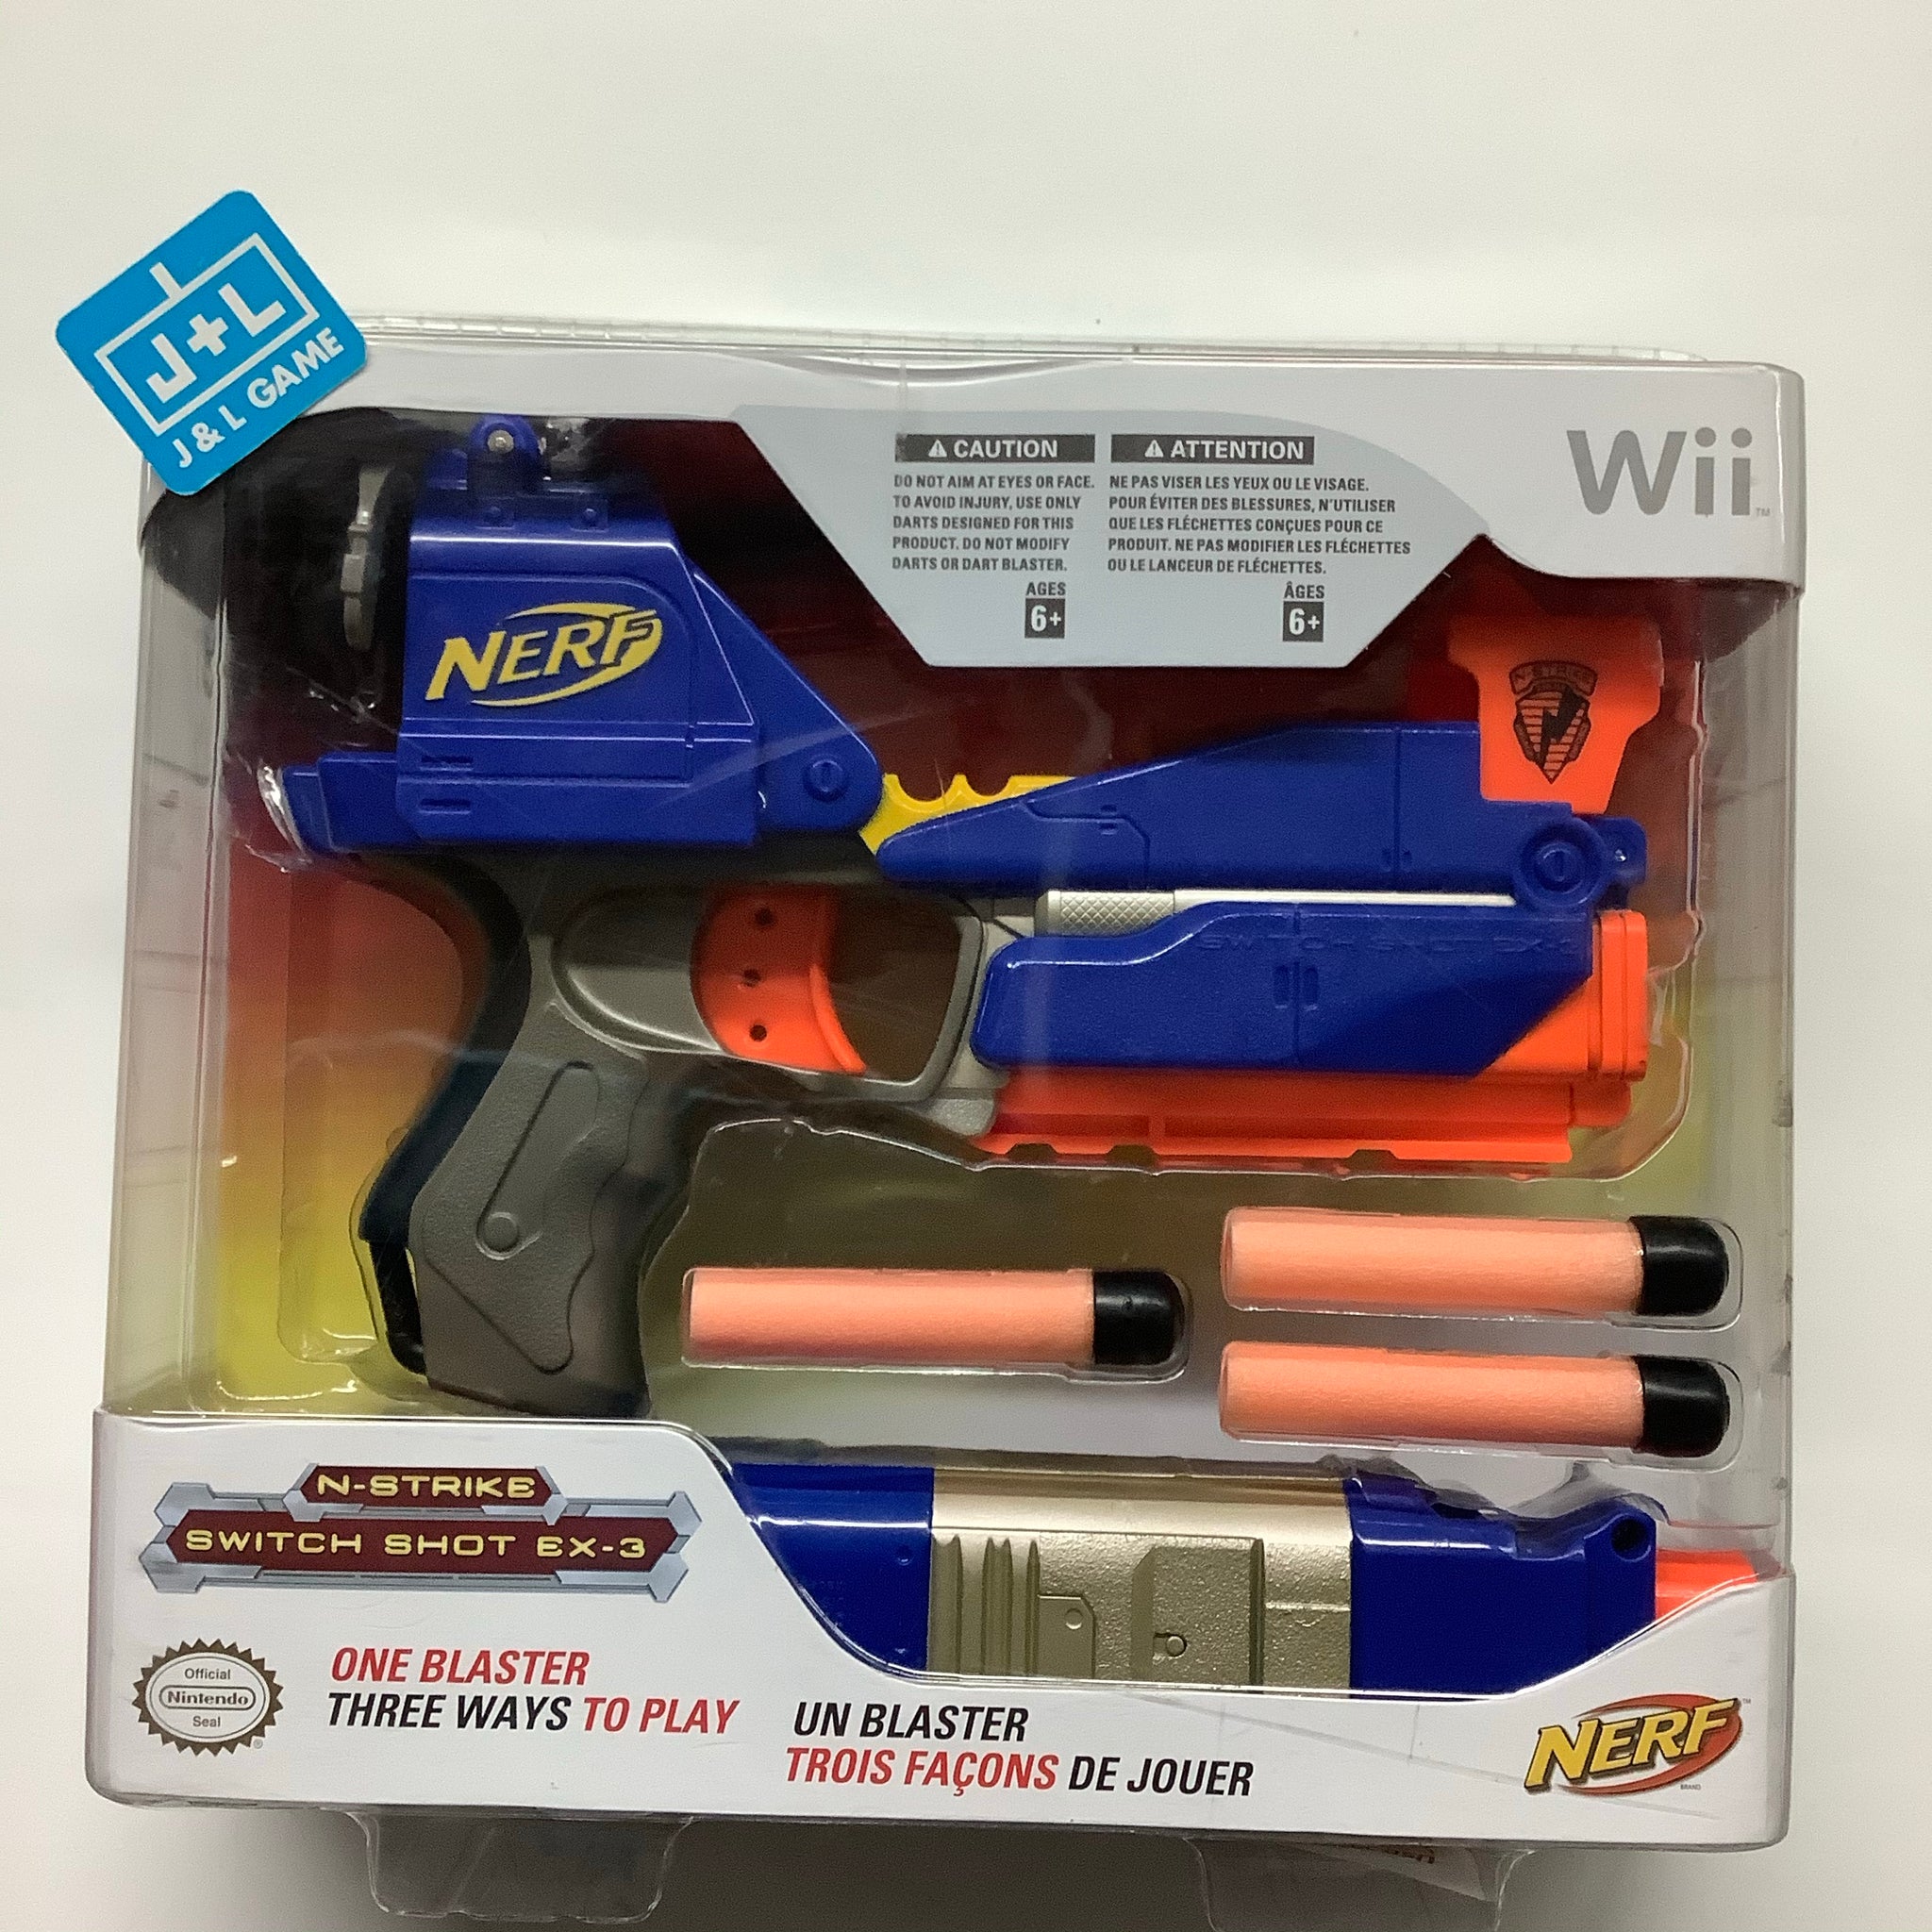 Nerf N-Strike Switch EX-3 (No Game or Remote) - Nintendo – J&L Video Games New York City